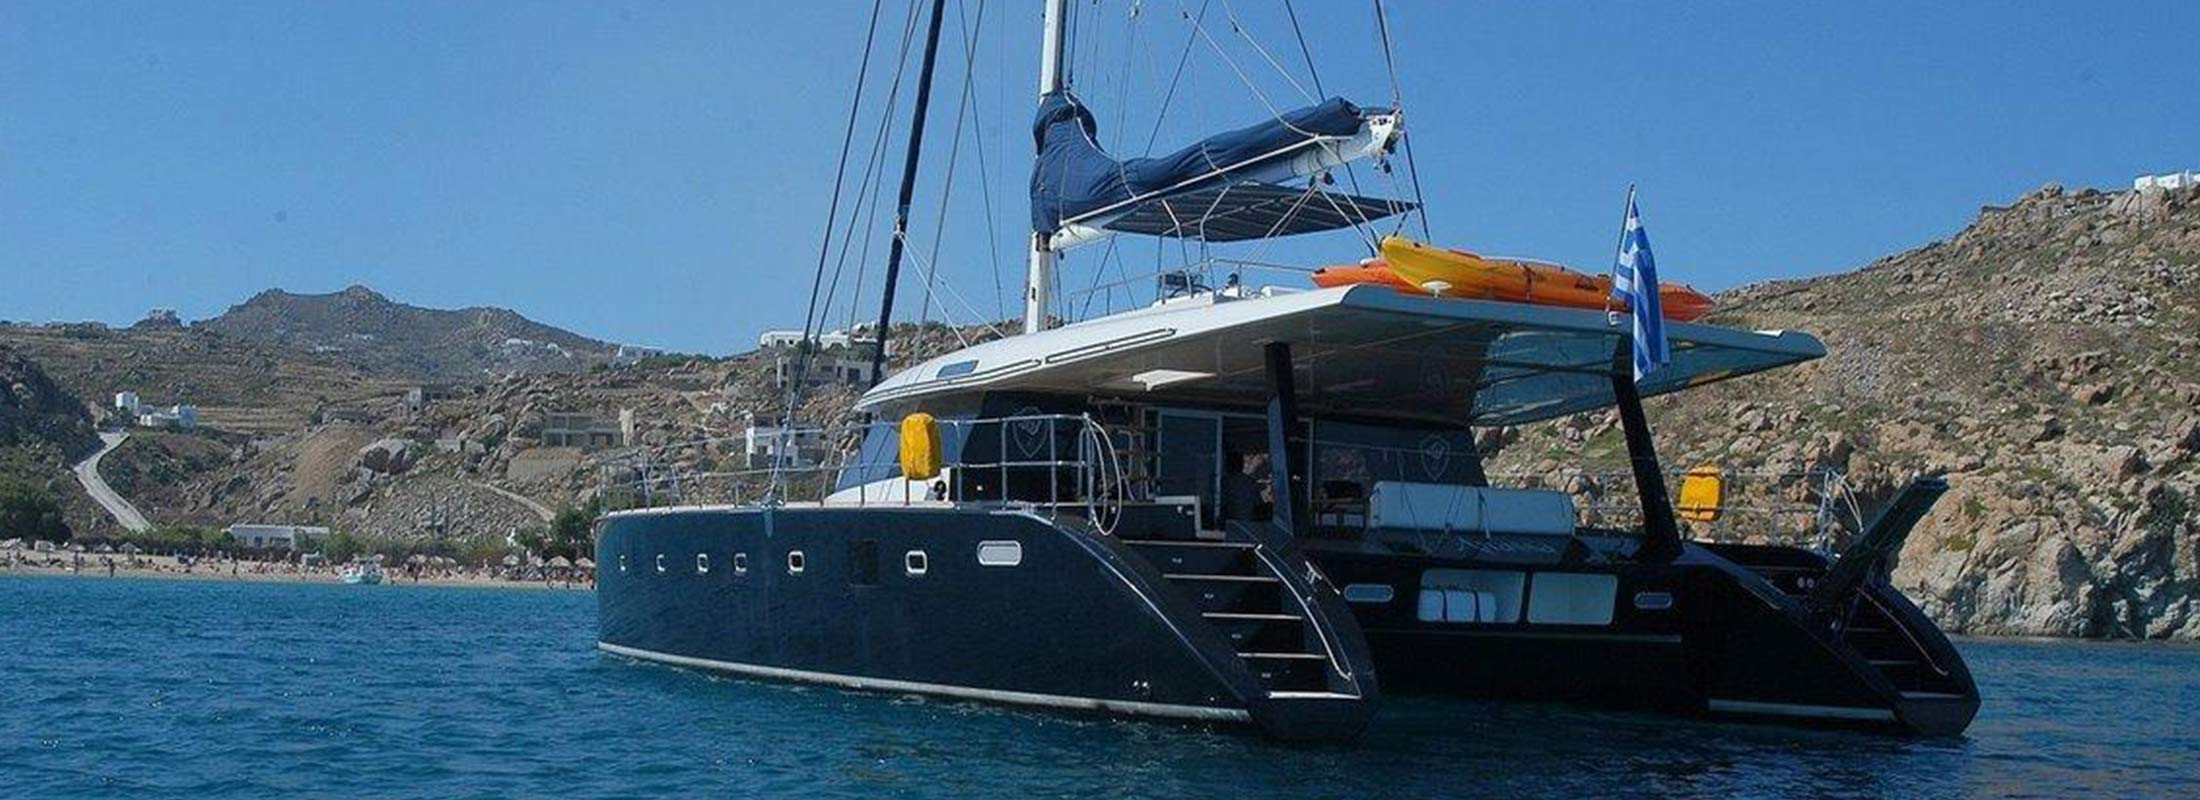 Levante Sailing Yacht for Charter Mediterranean Caribbean Sea slider 2